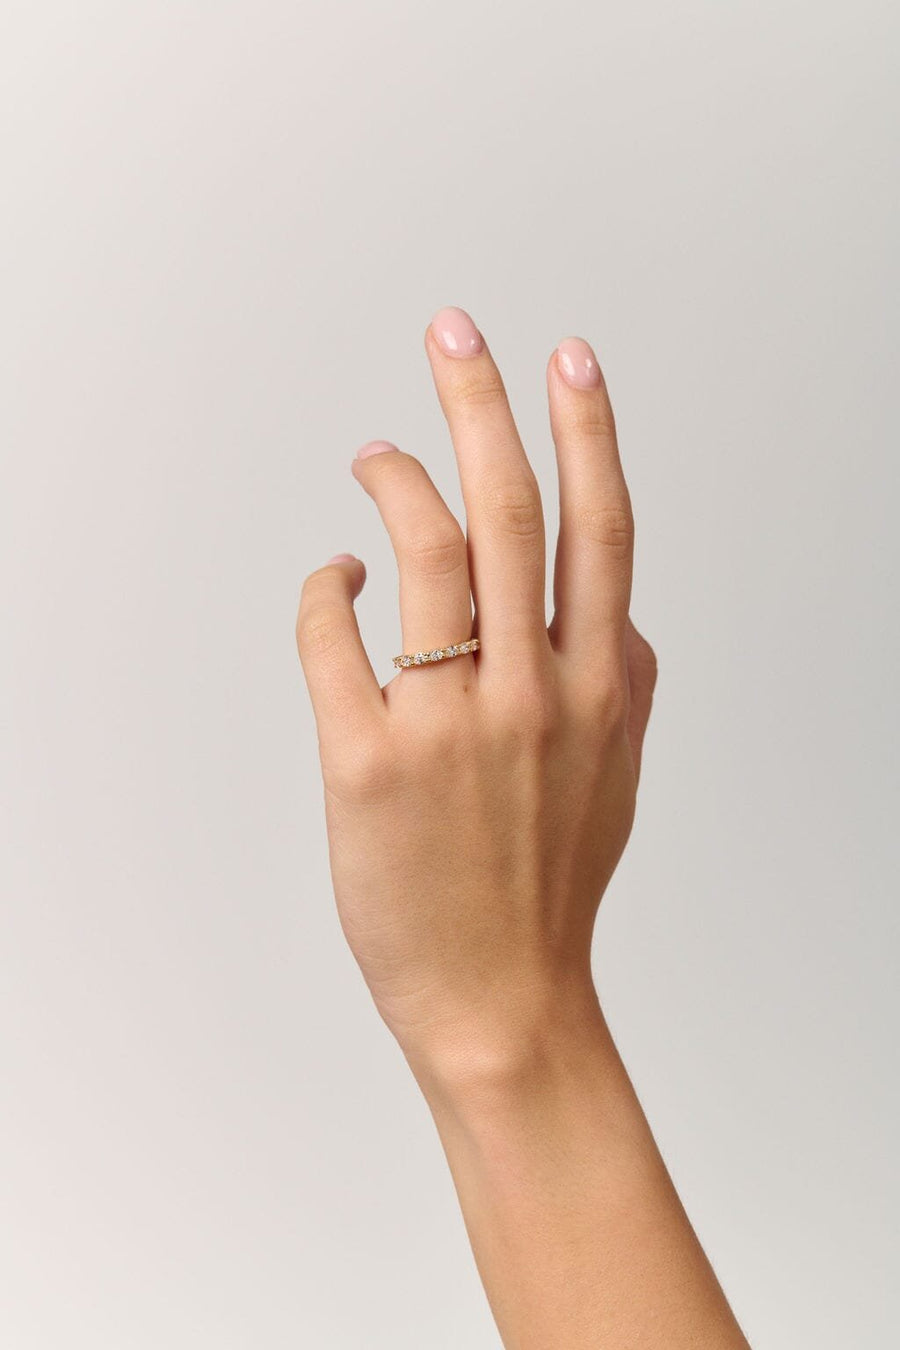 Lauren Diamond Band - Size 16.75 - 18K White Gold - Eliise Maar Jewellery